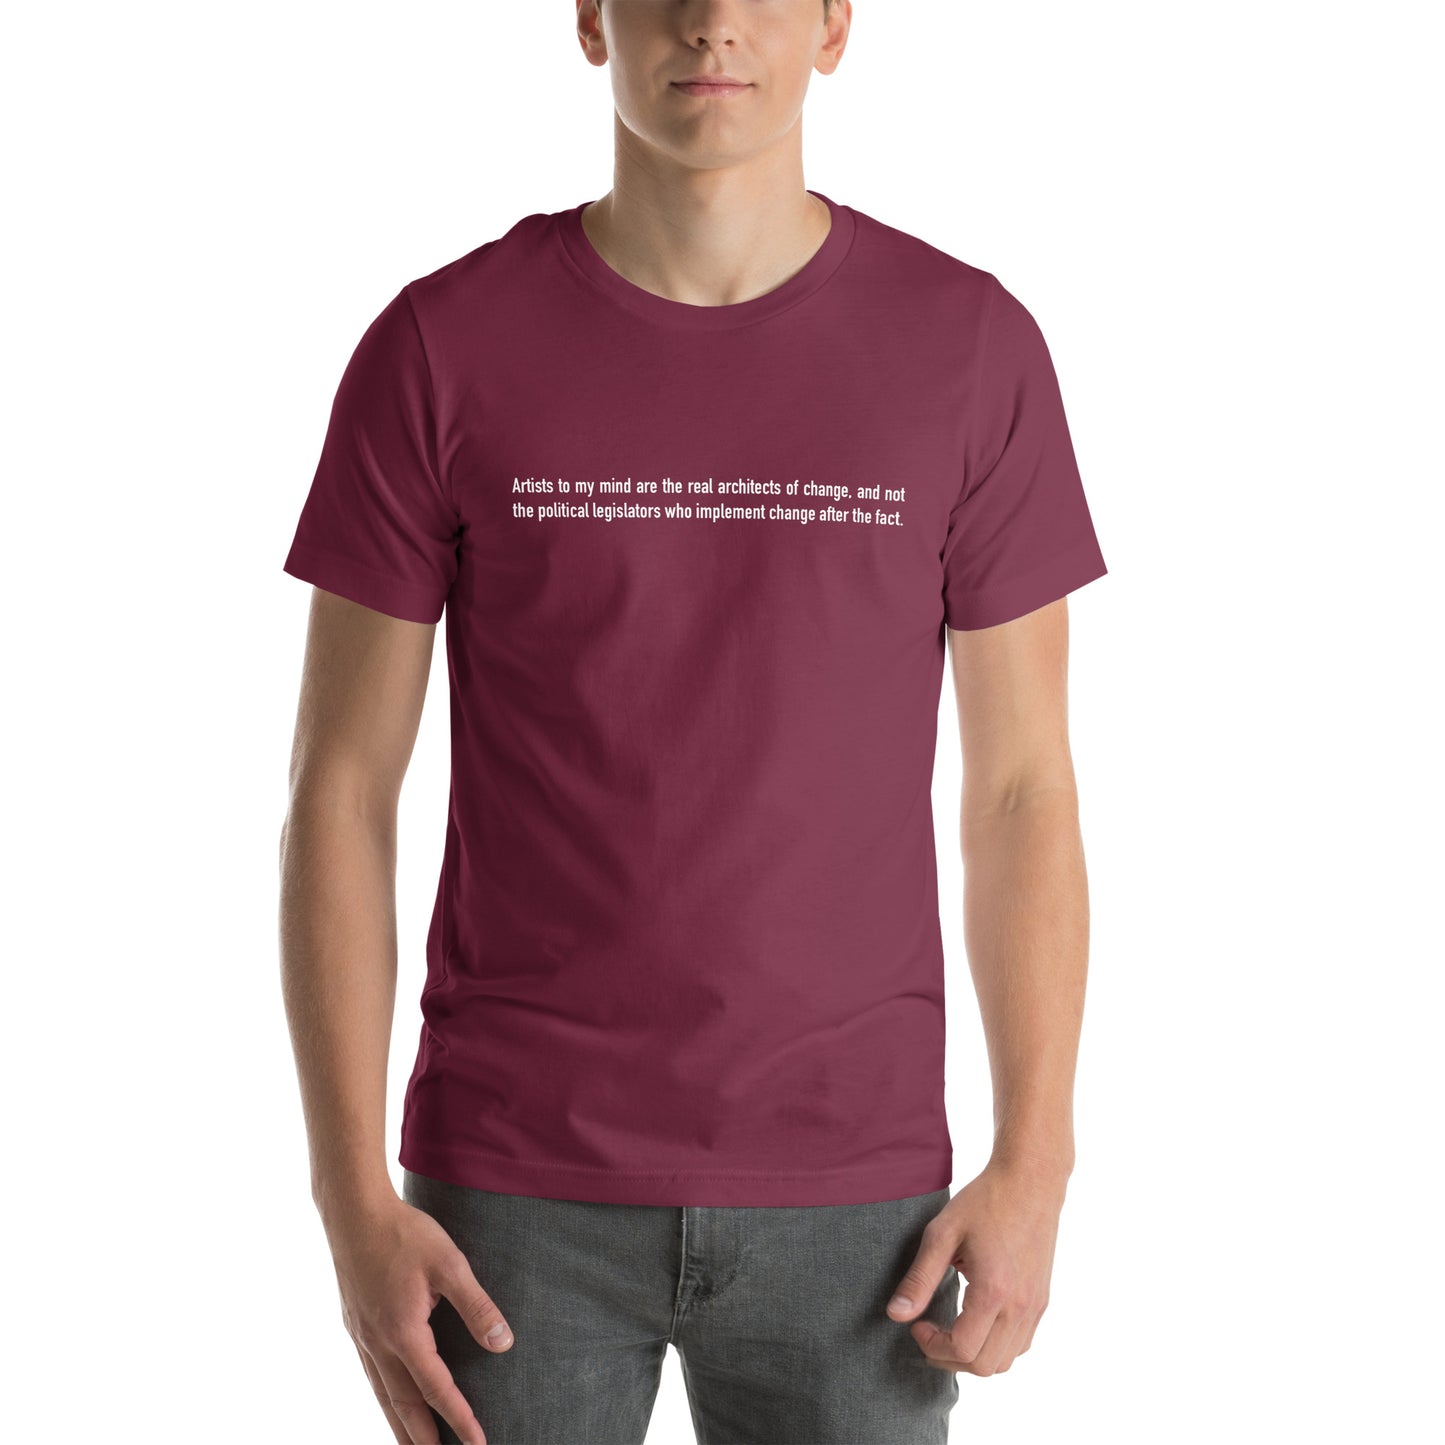 H1 Massive - Unisex t-shirt - William S. Burrows "Artists" Quote